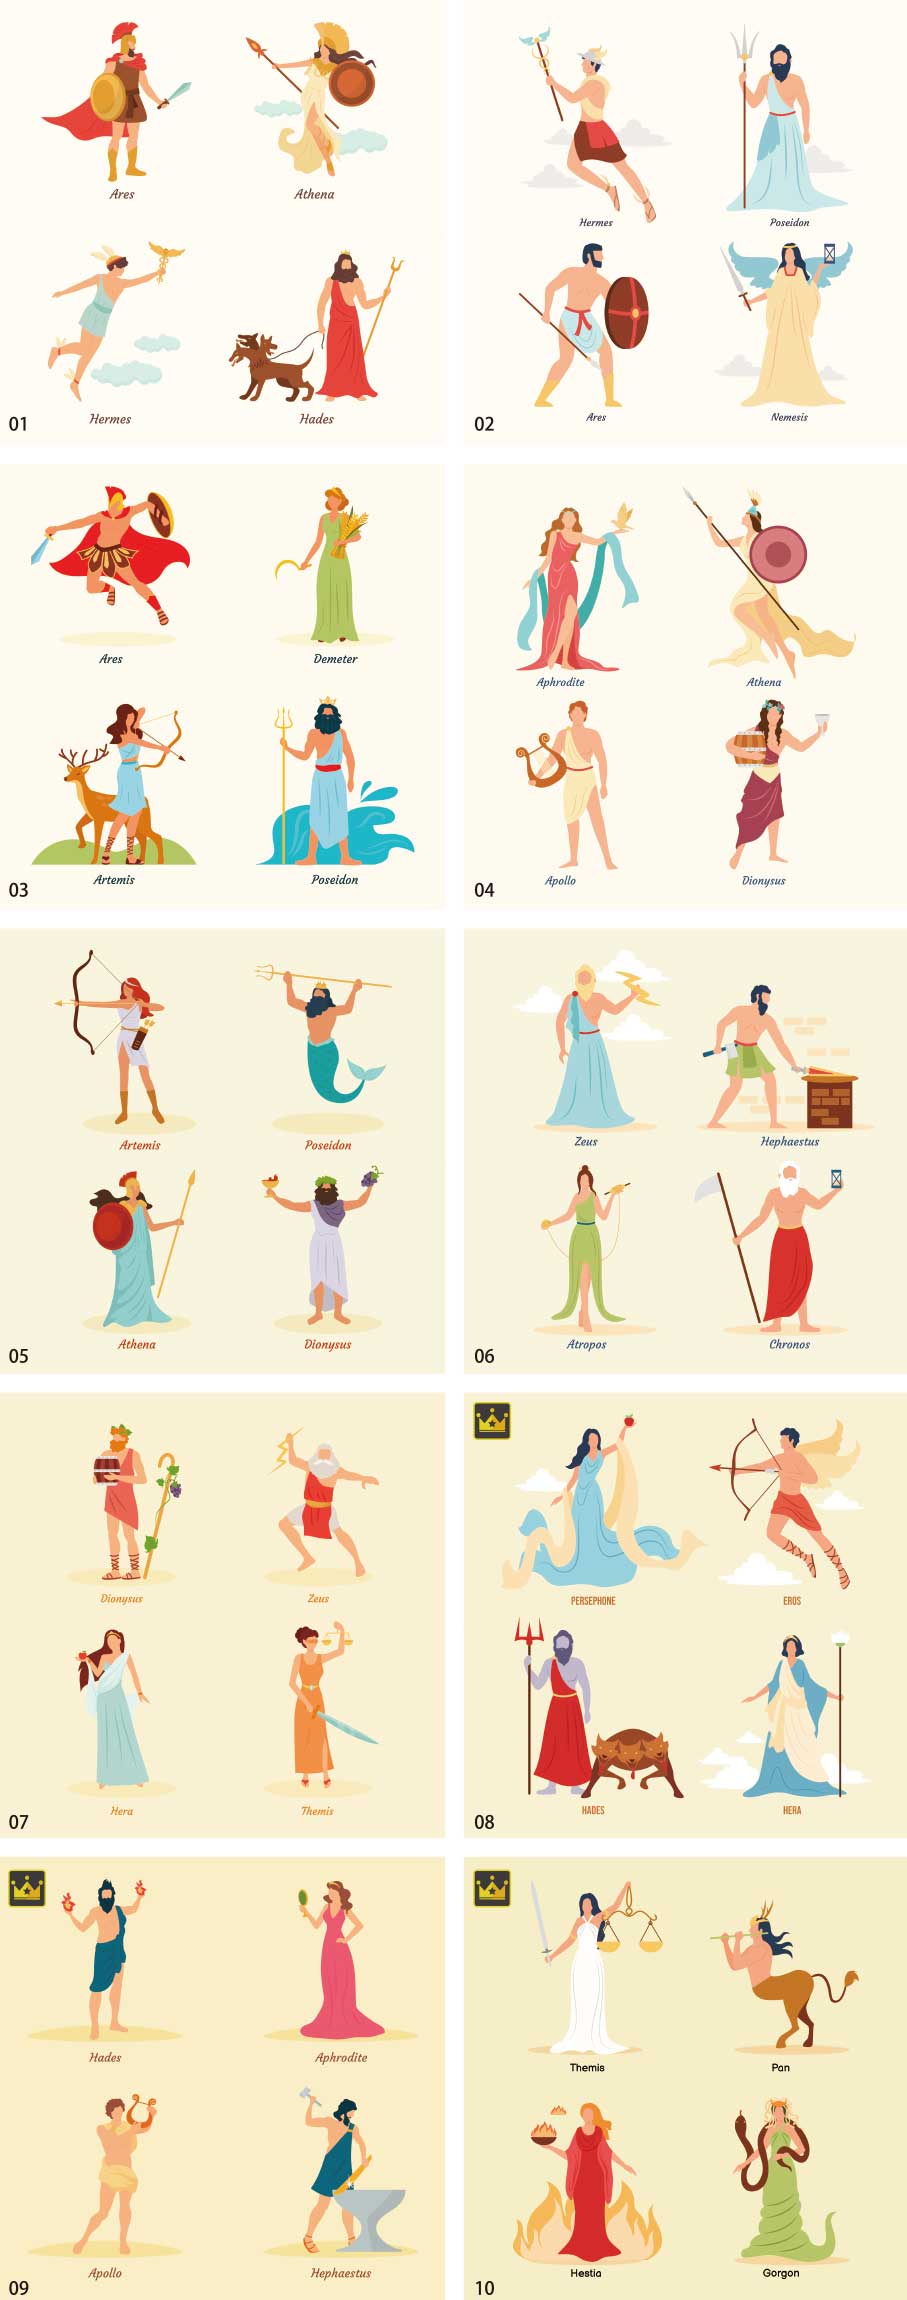 Greek mythology illustration collection